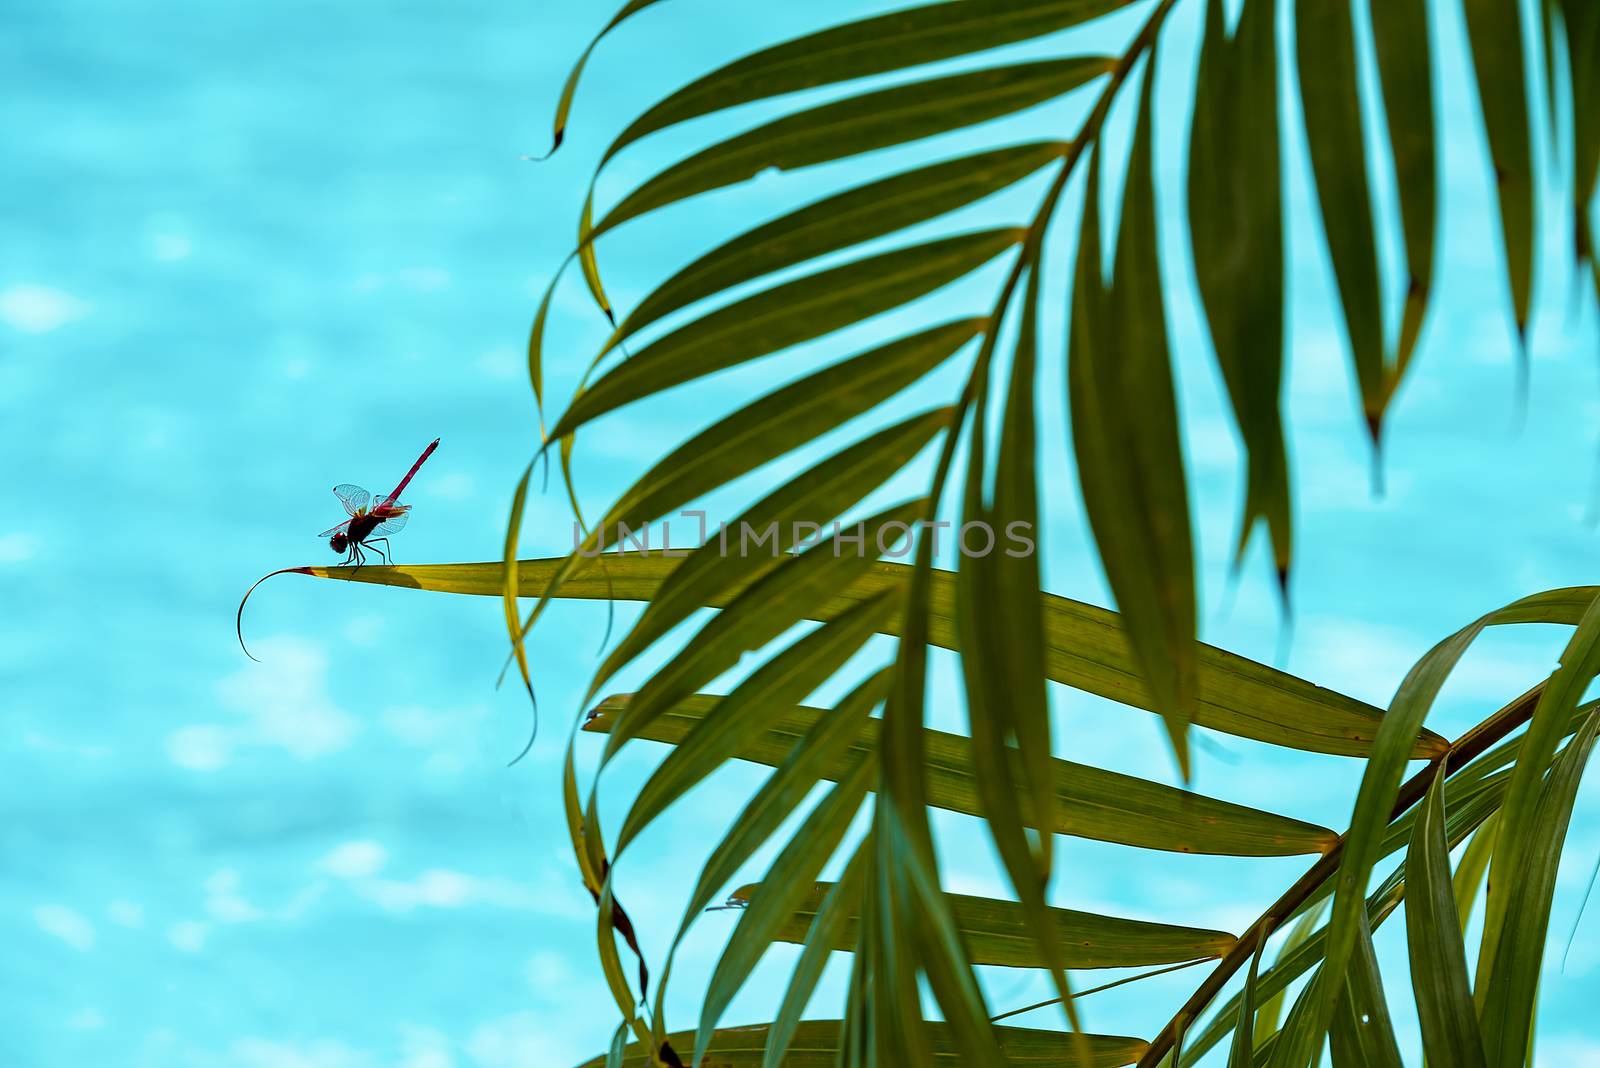 Udewalewe, Sri Lanka, Aug 2015:  Red dragonfly perched on a leaf overlooking blue water